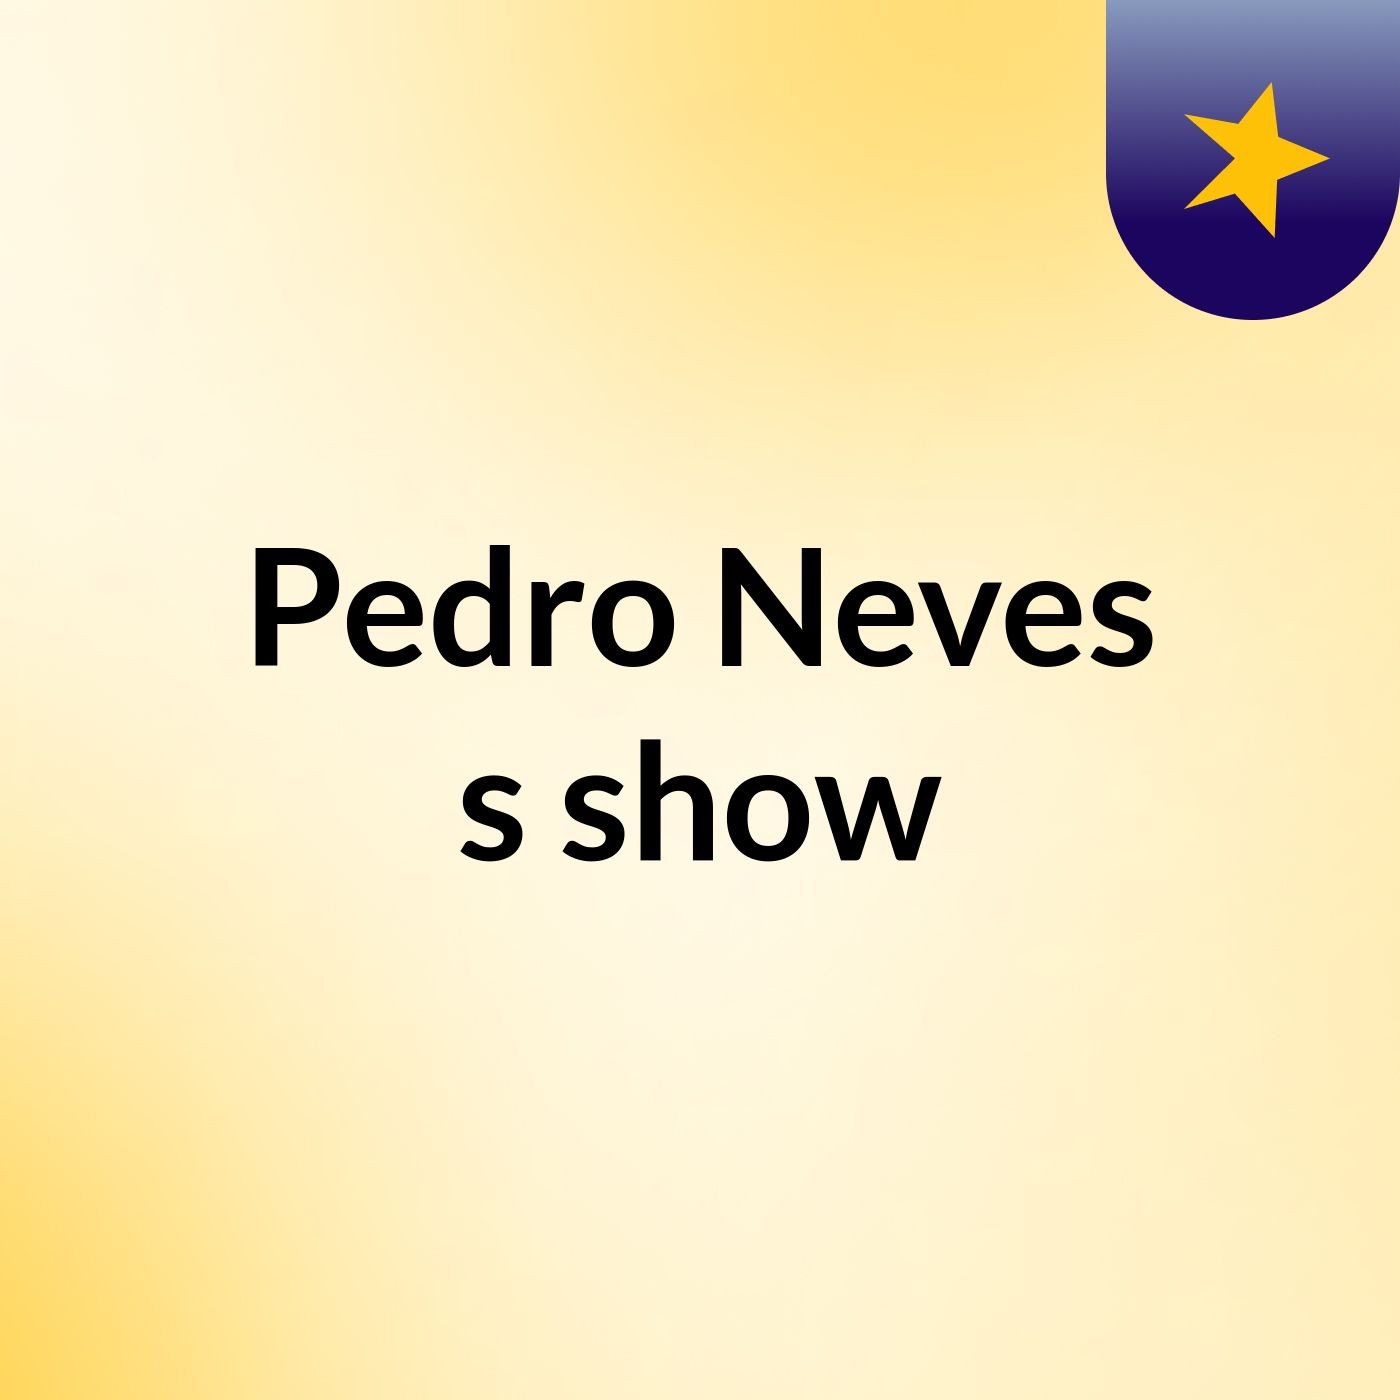 Pedro Neves's show